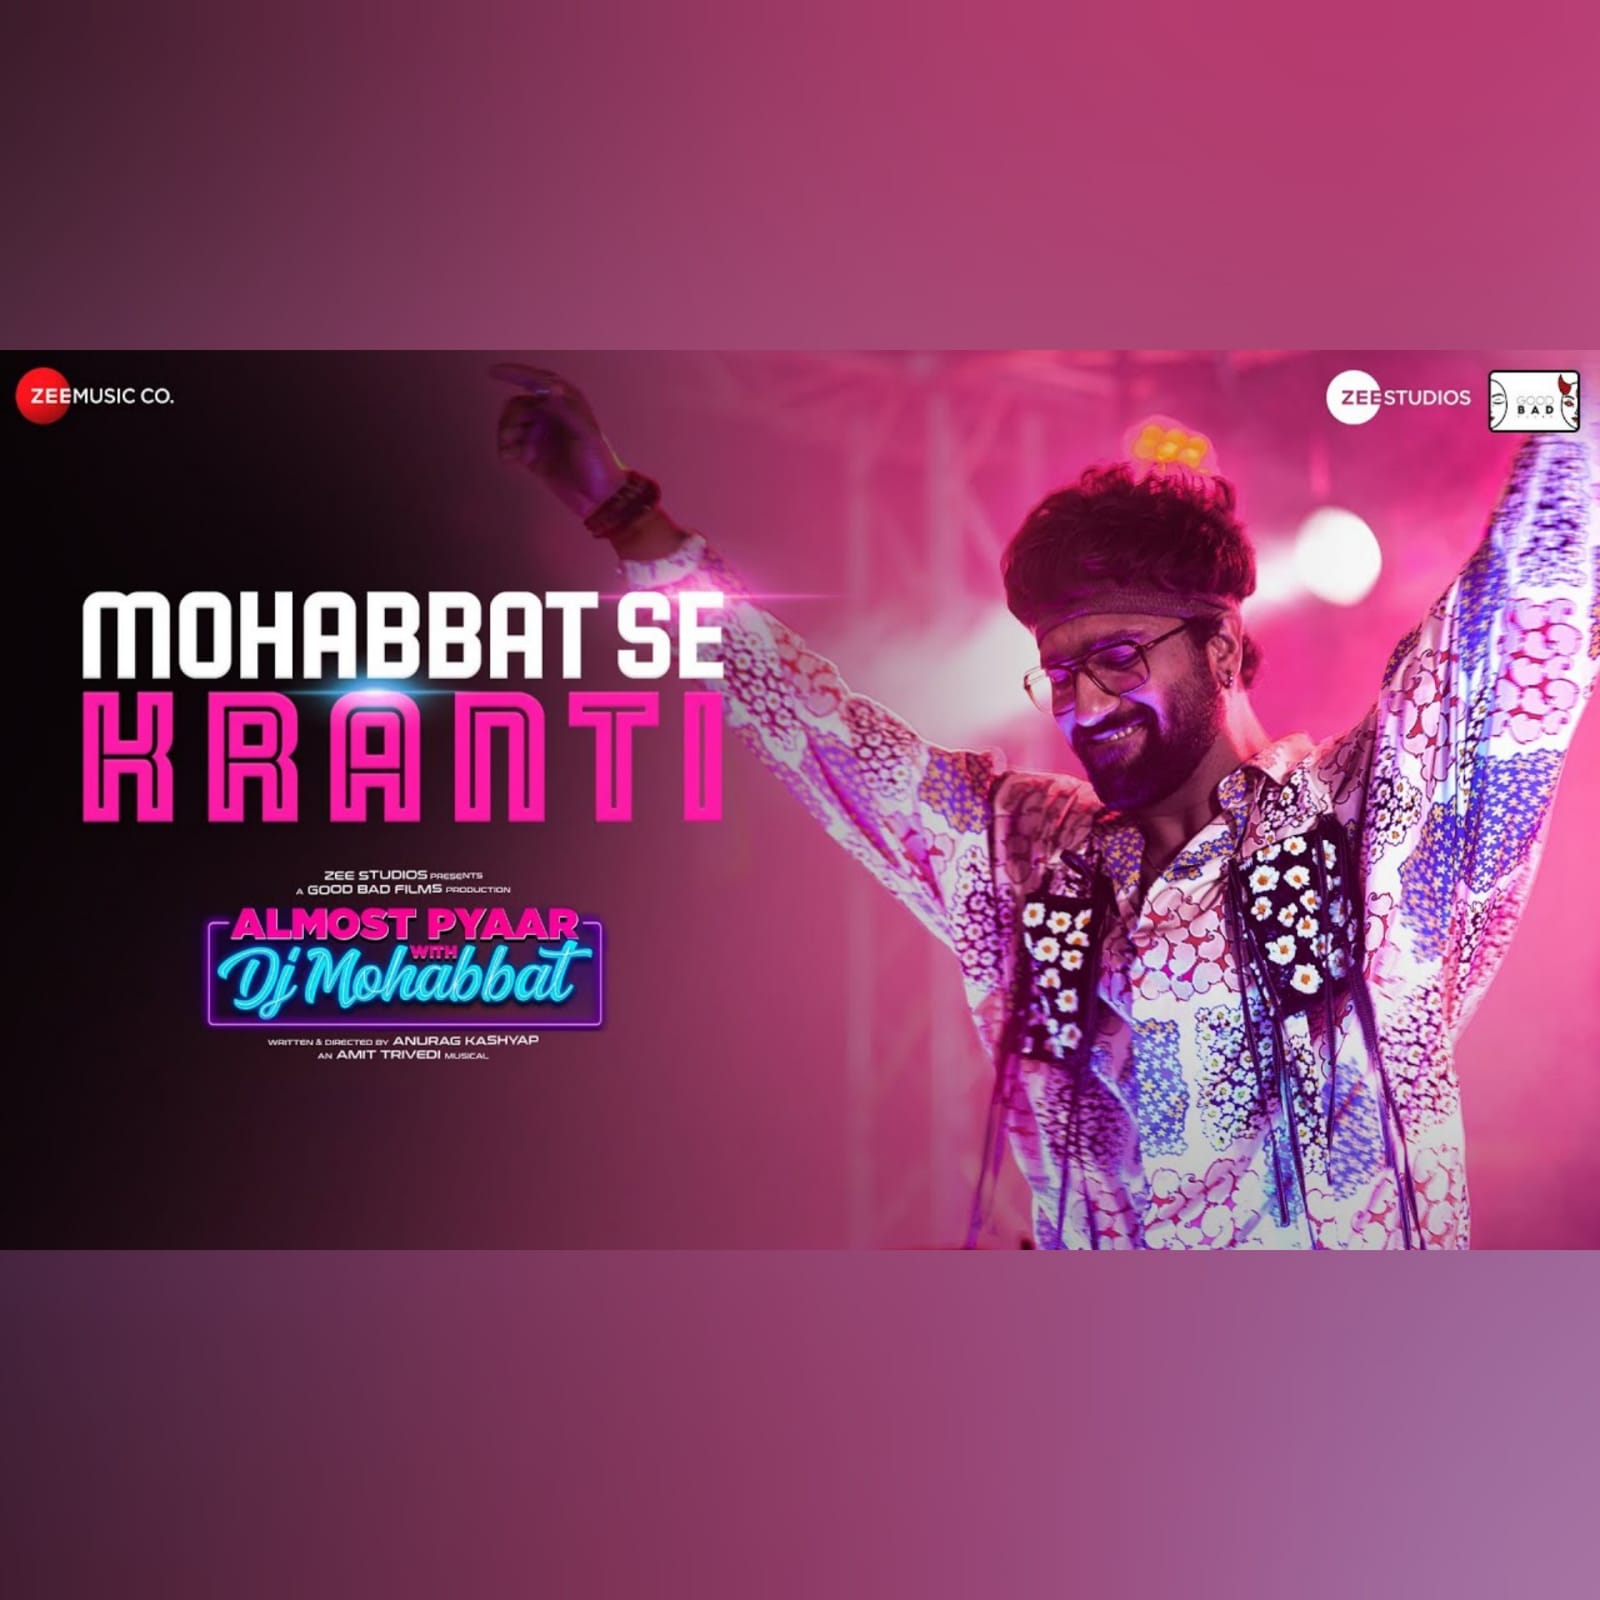 Mohabbat Se Kranti; Almost Pyaar with DJ Mohabbat Movie Song